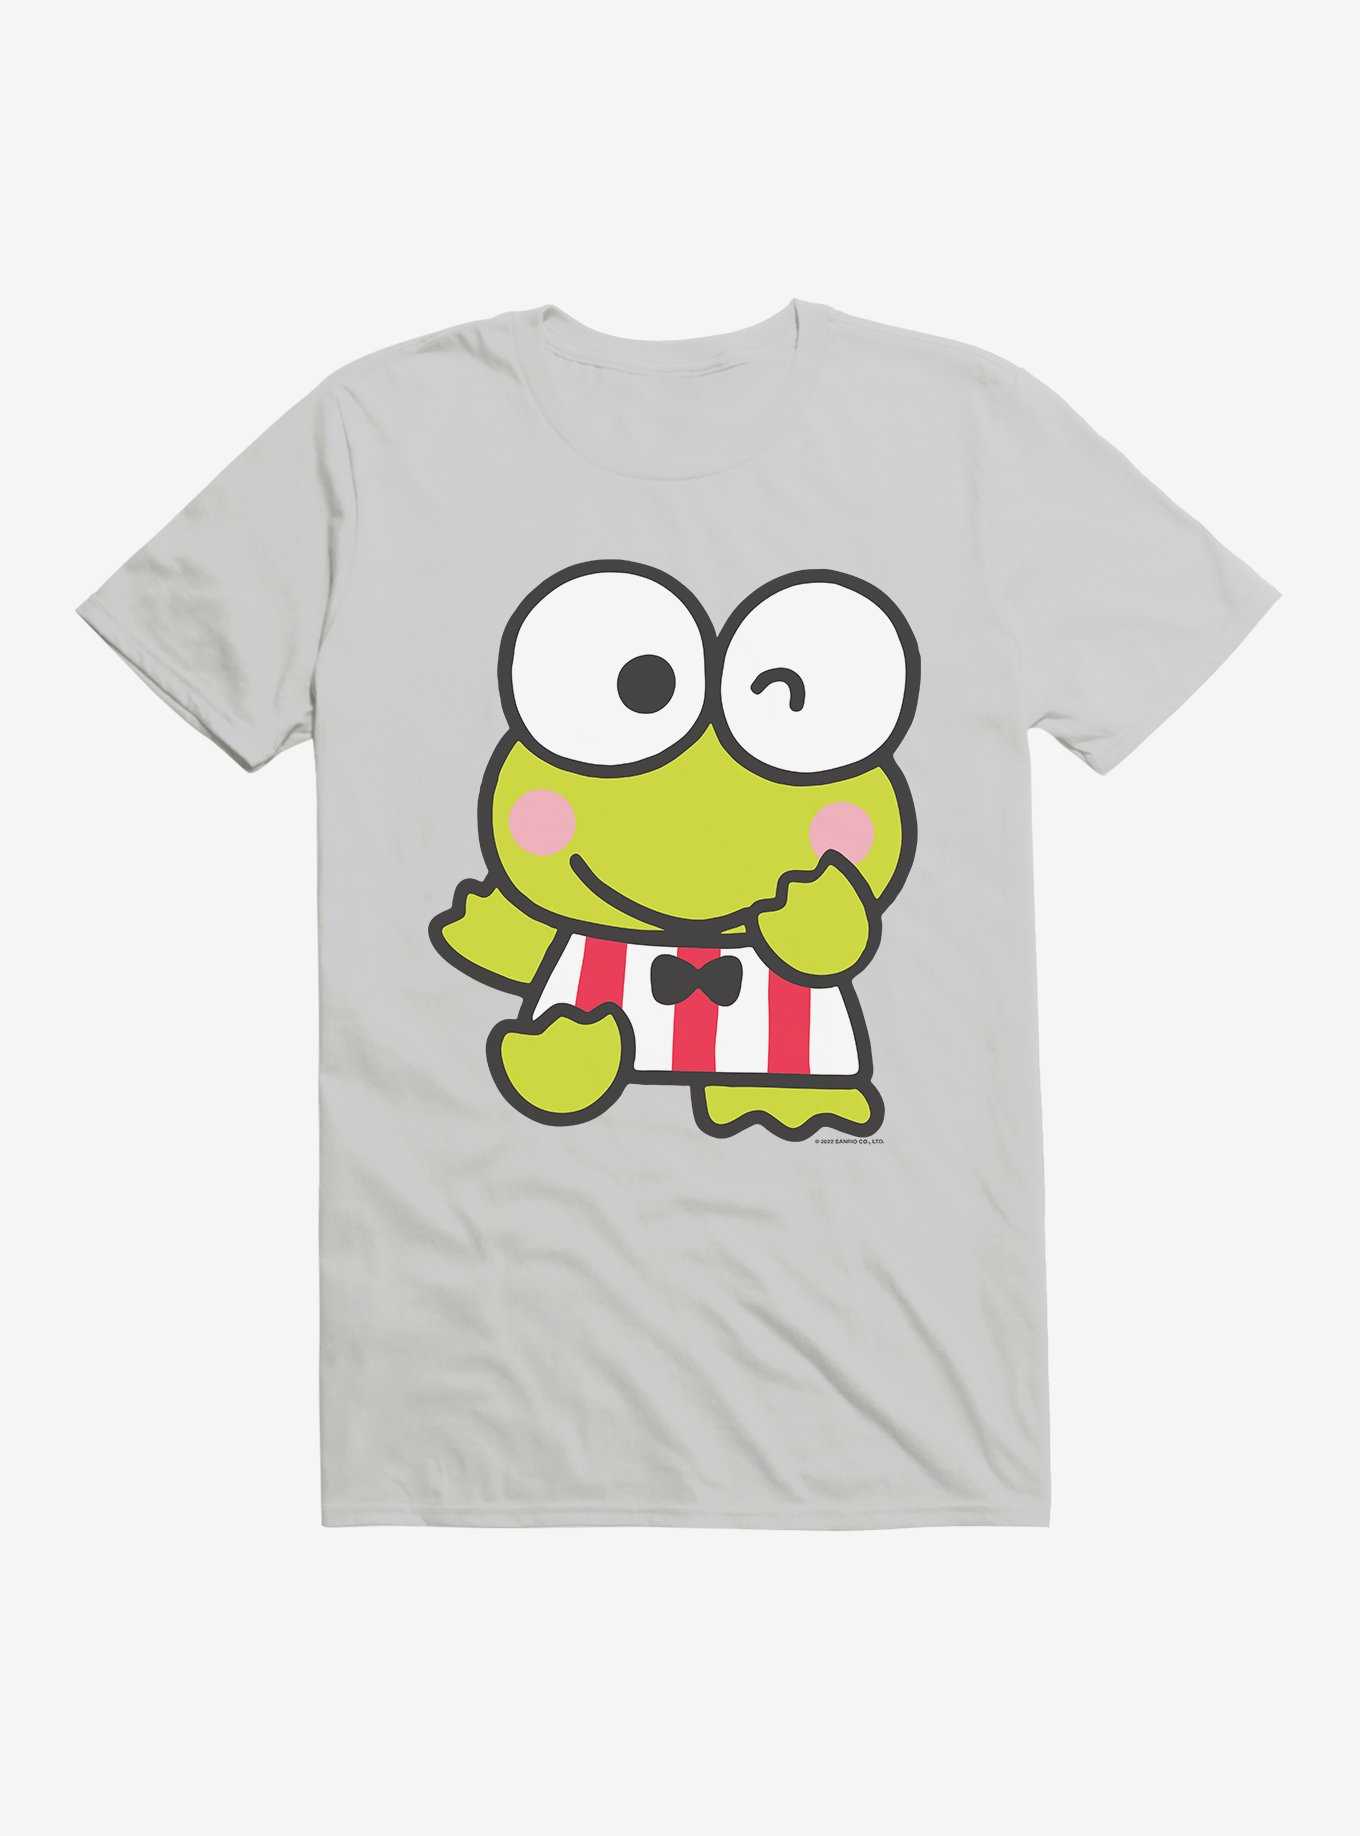 Keroppi Winking T-Shirt, , hi-res